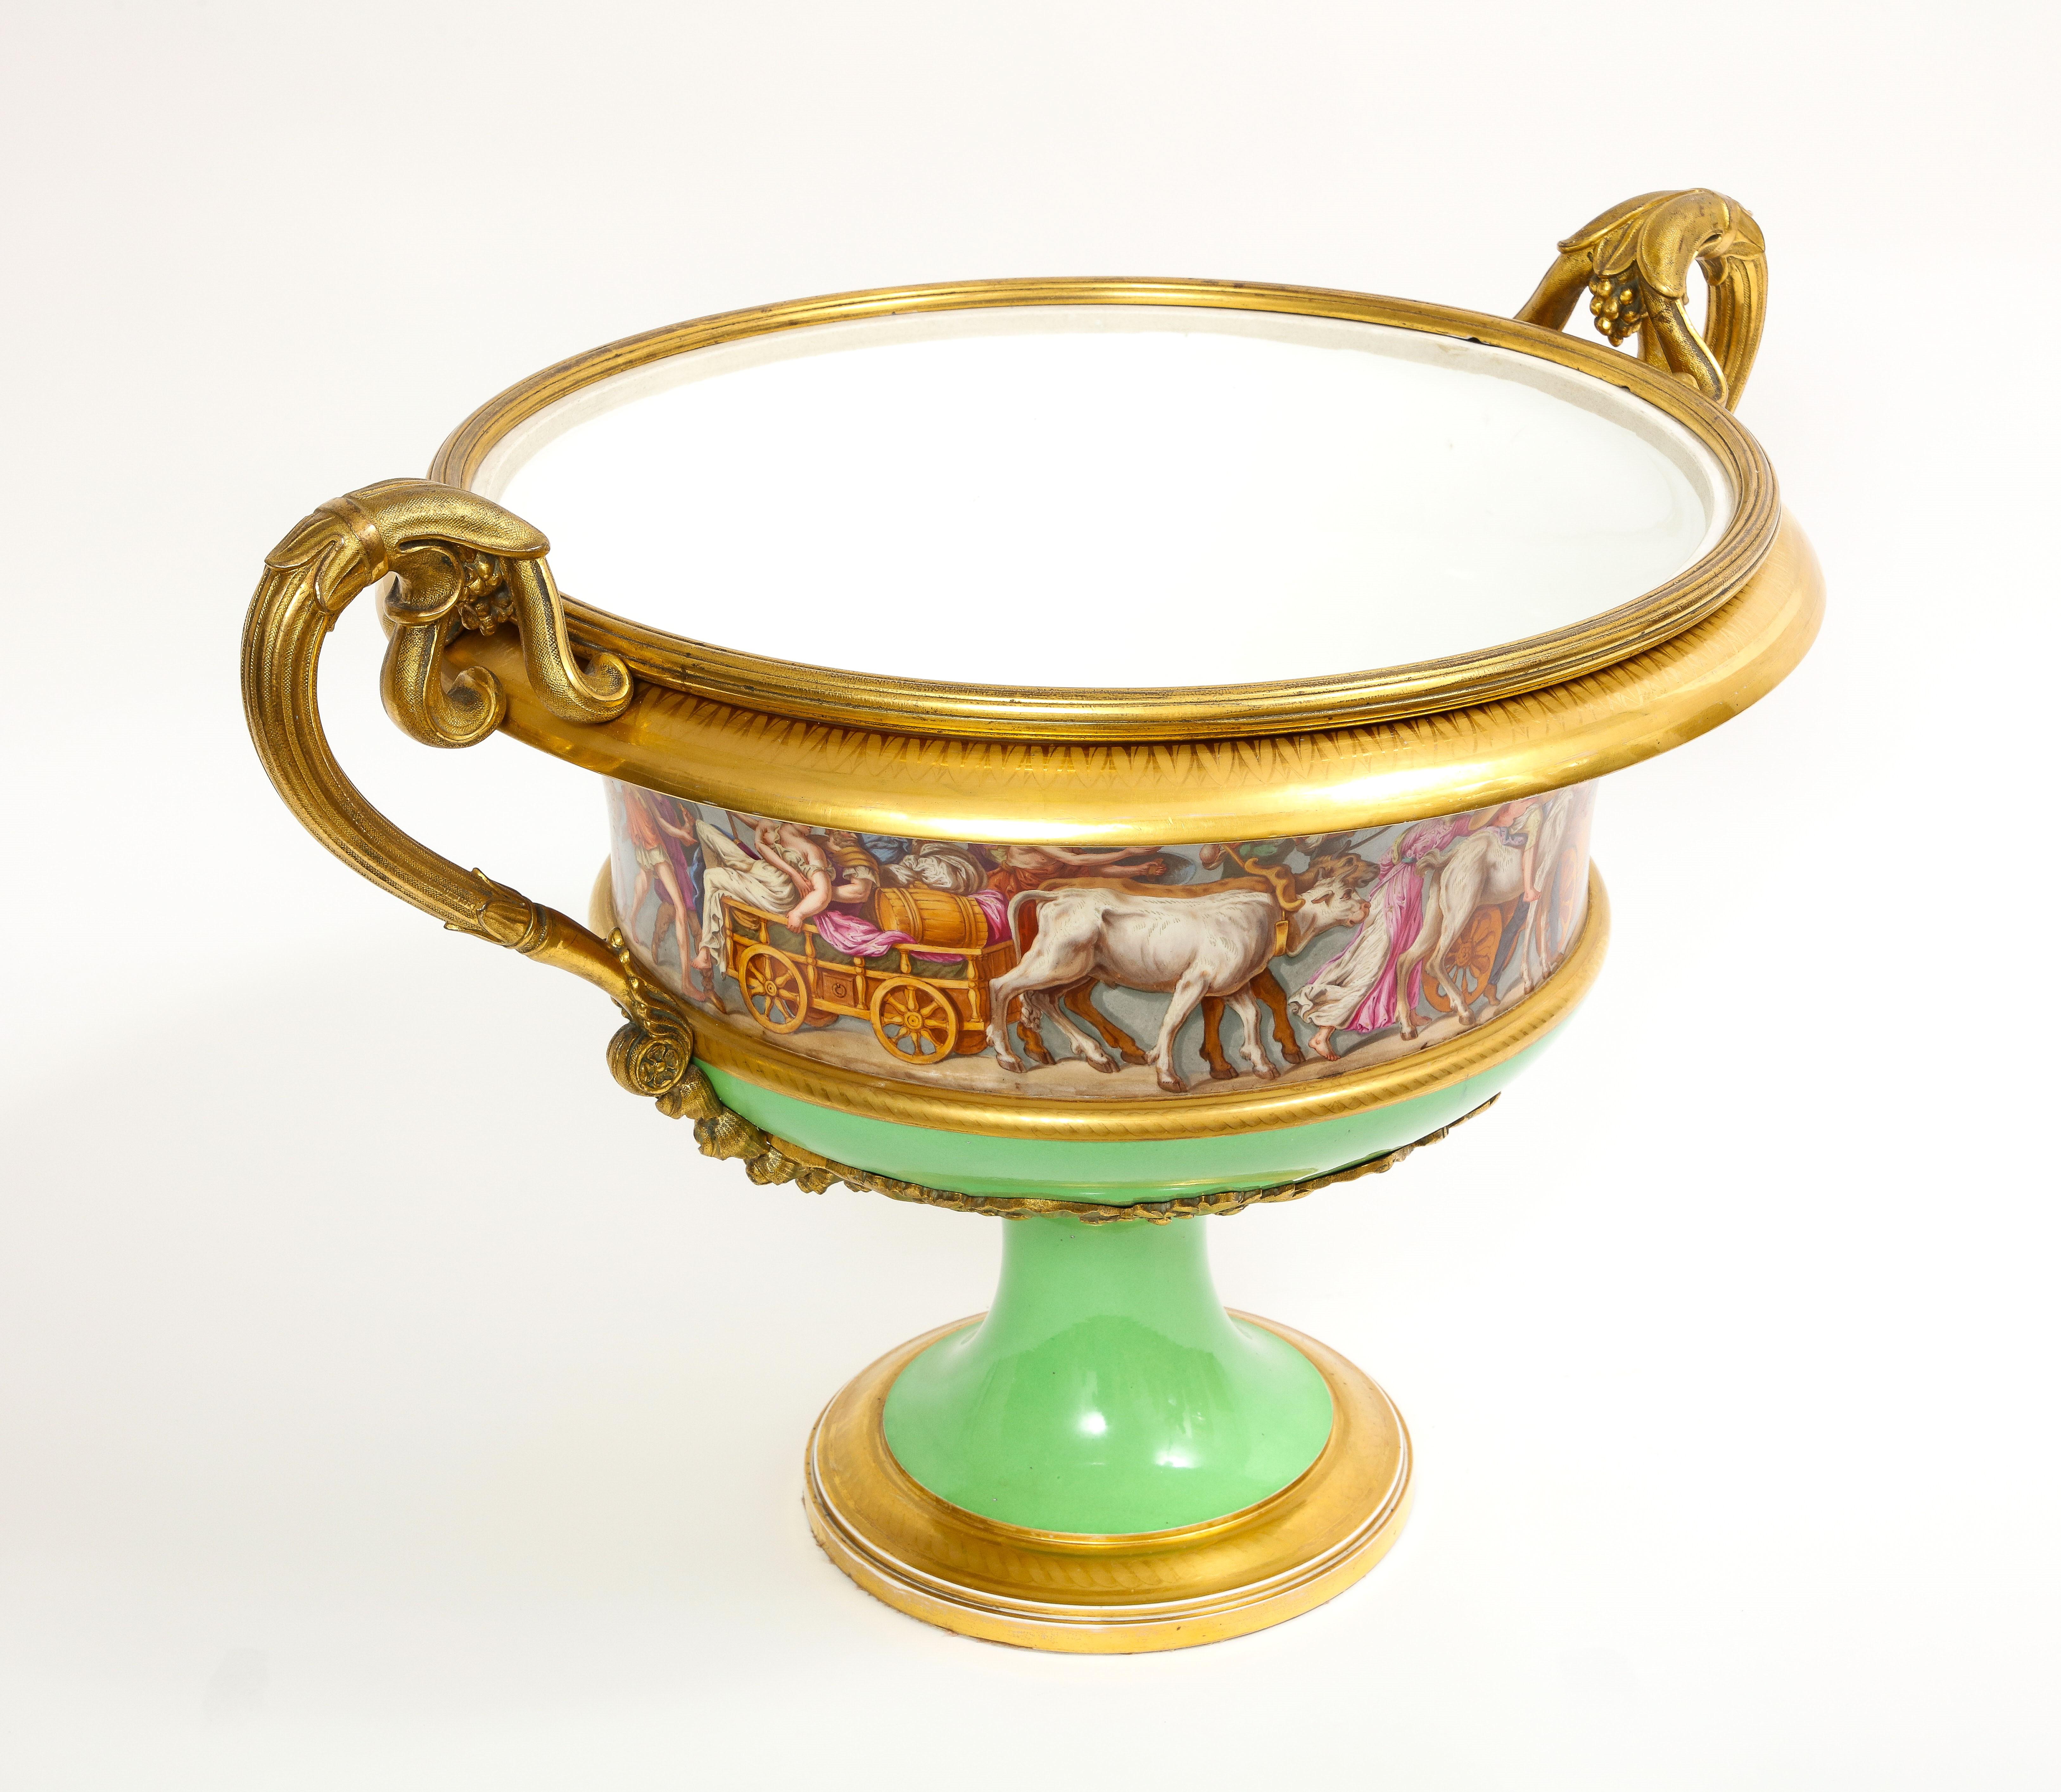 Monumental Sevres Porcelain Ormolu-Mounted 2-Handle Campana Form Centerpiece For Sale 5